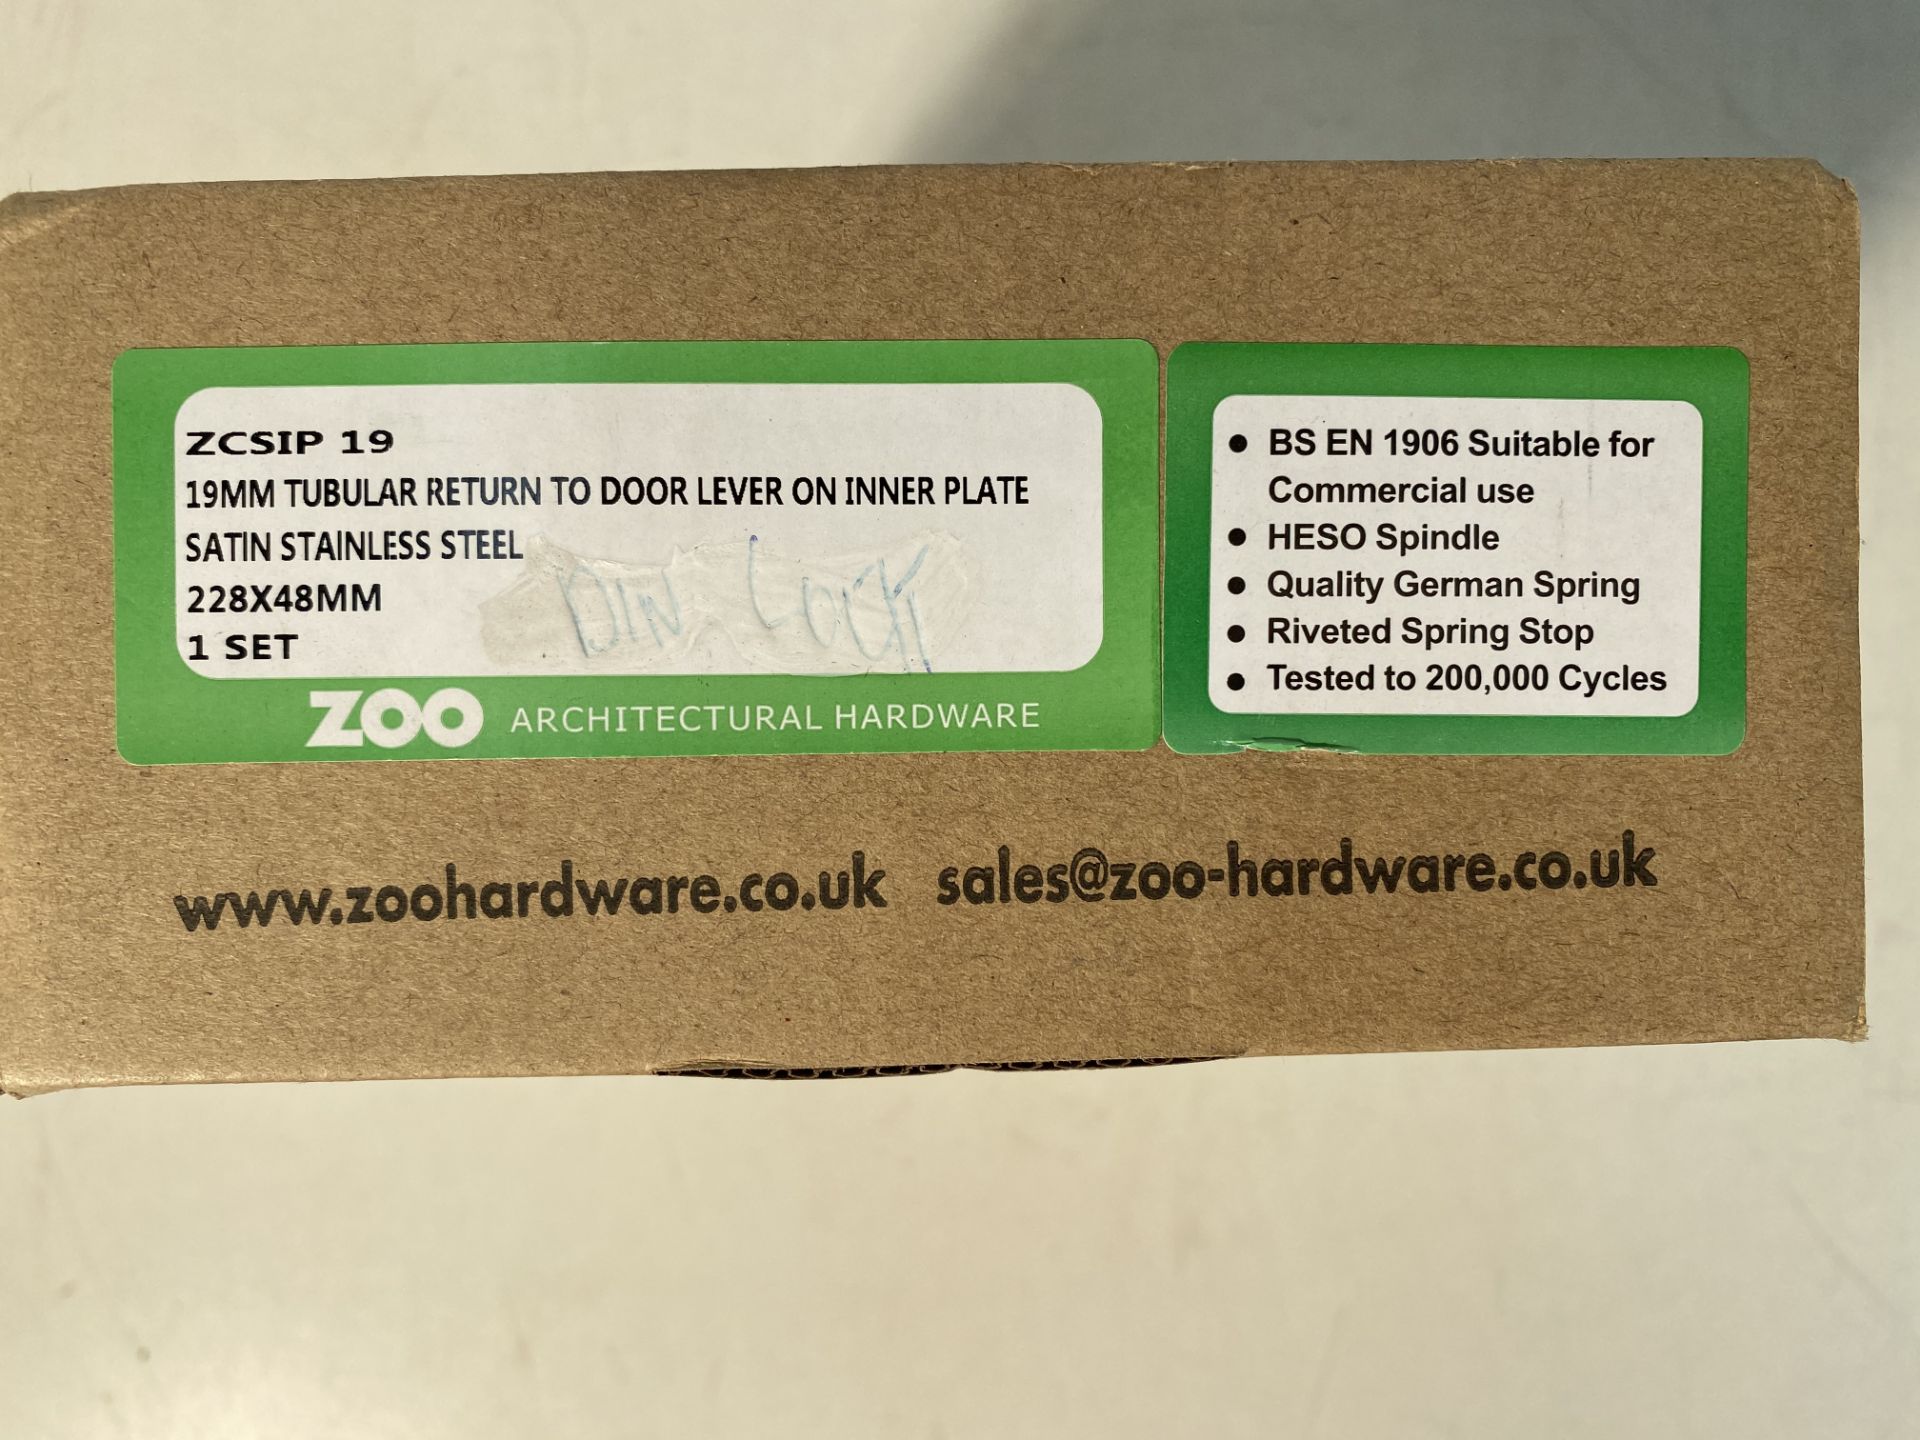 2 x Zoo Hardware ZCSIP19 19mm Tubular Return To Door Lever On Inner Plate Set - Image 2 of 3